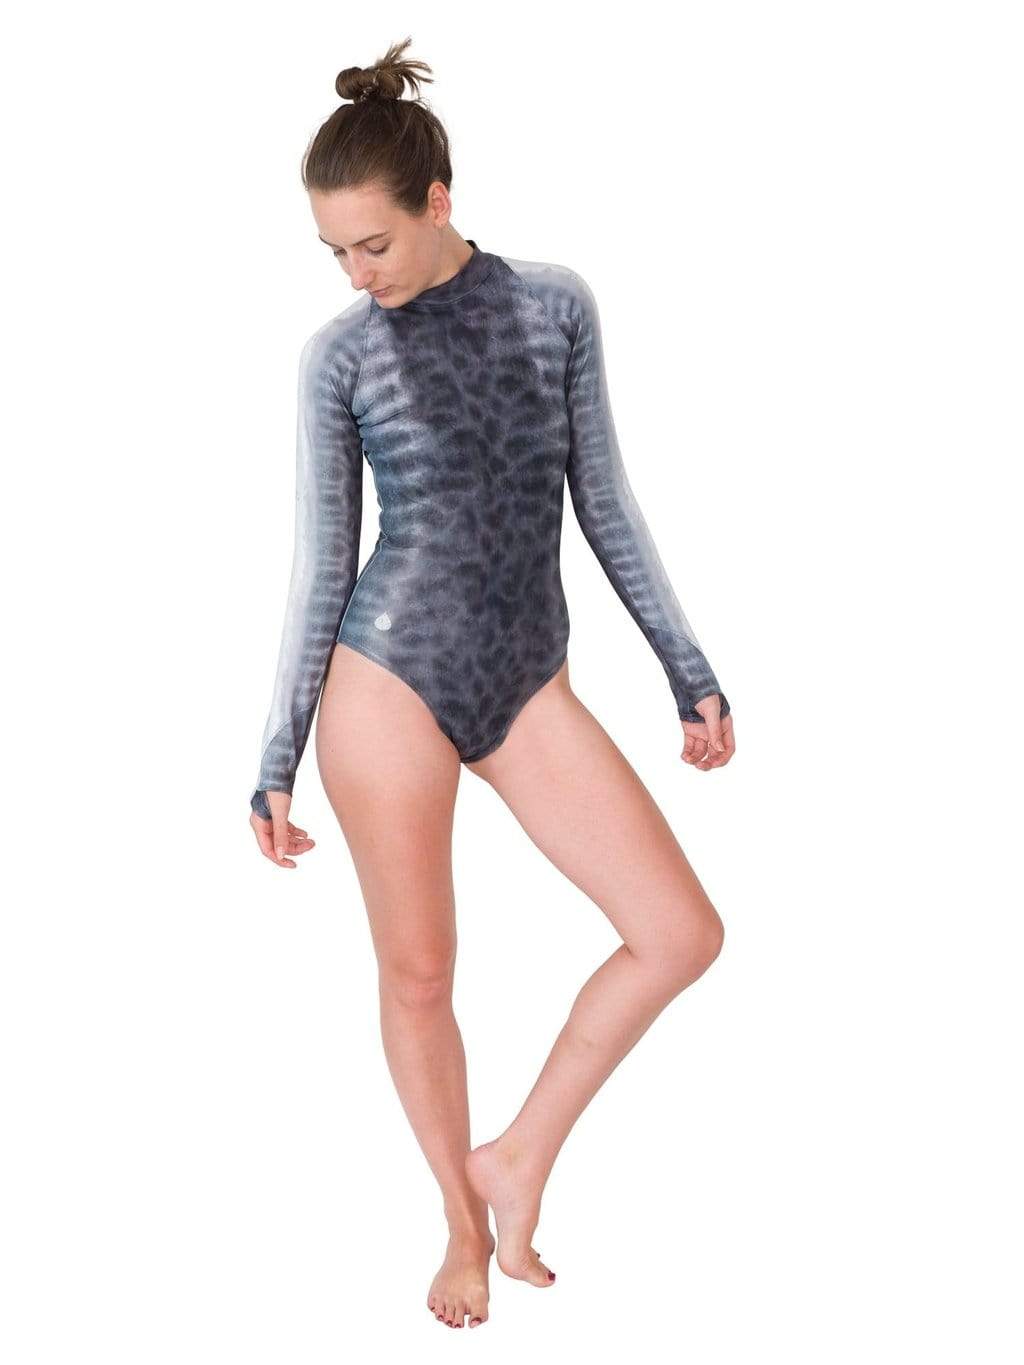 Tutublue - Swimsuits with UV Protection Shark Tank Season 7